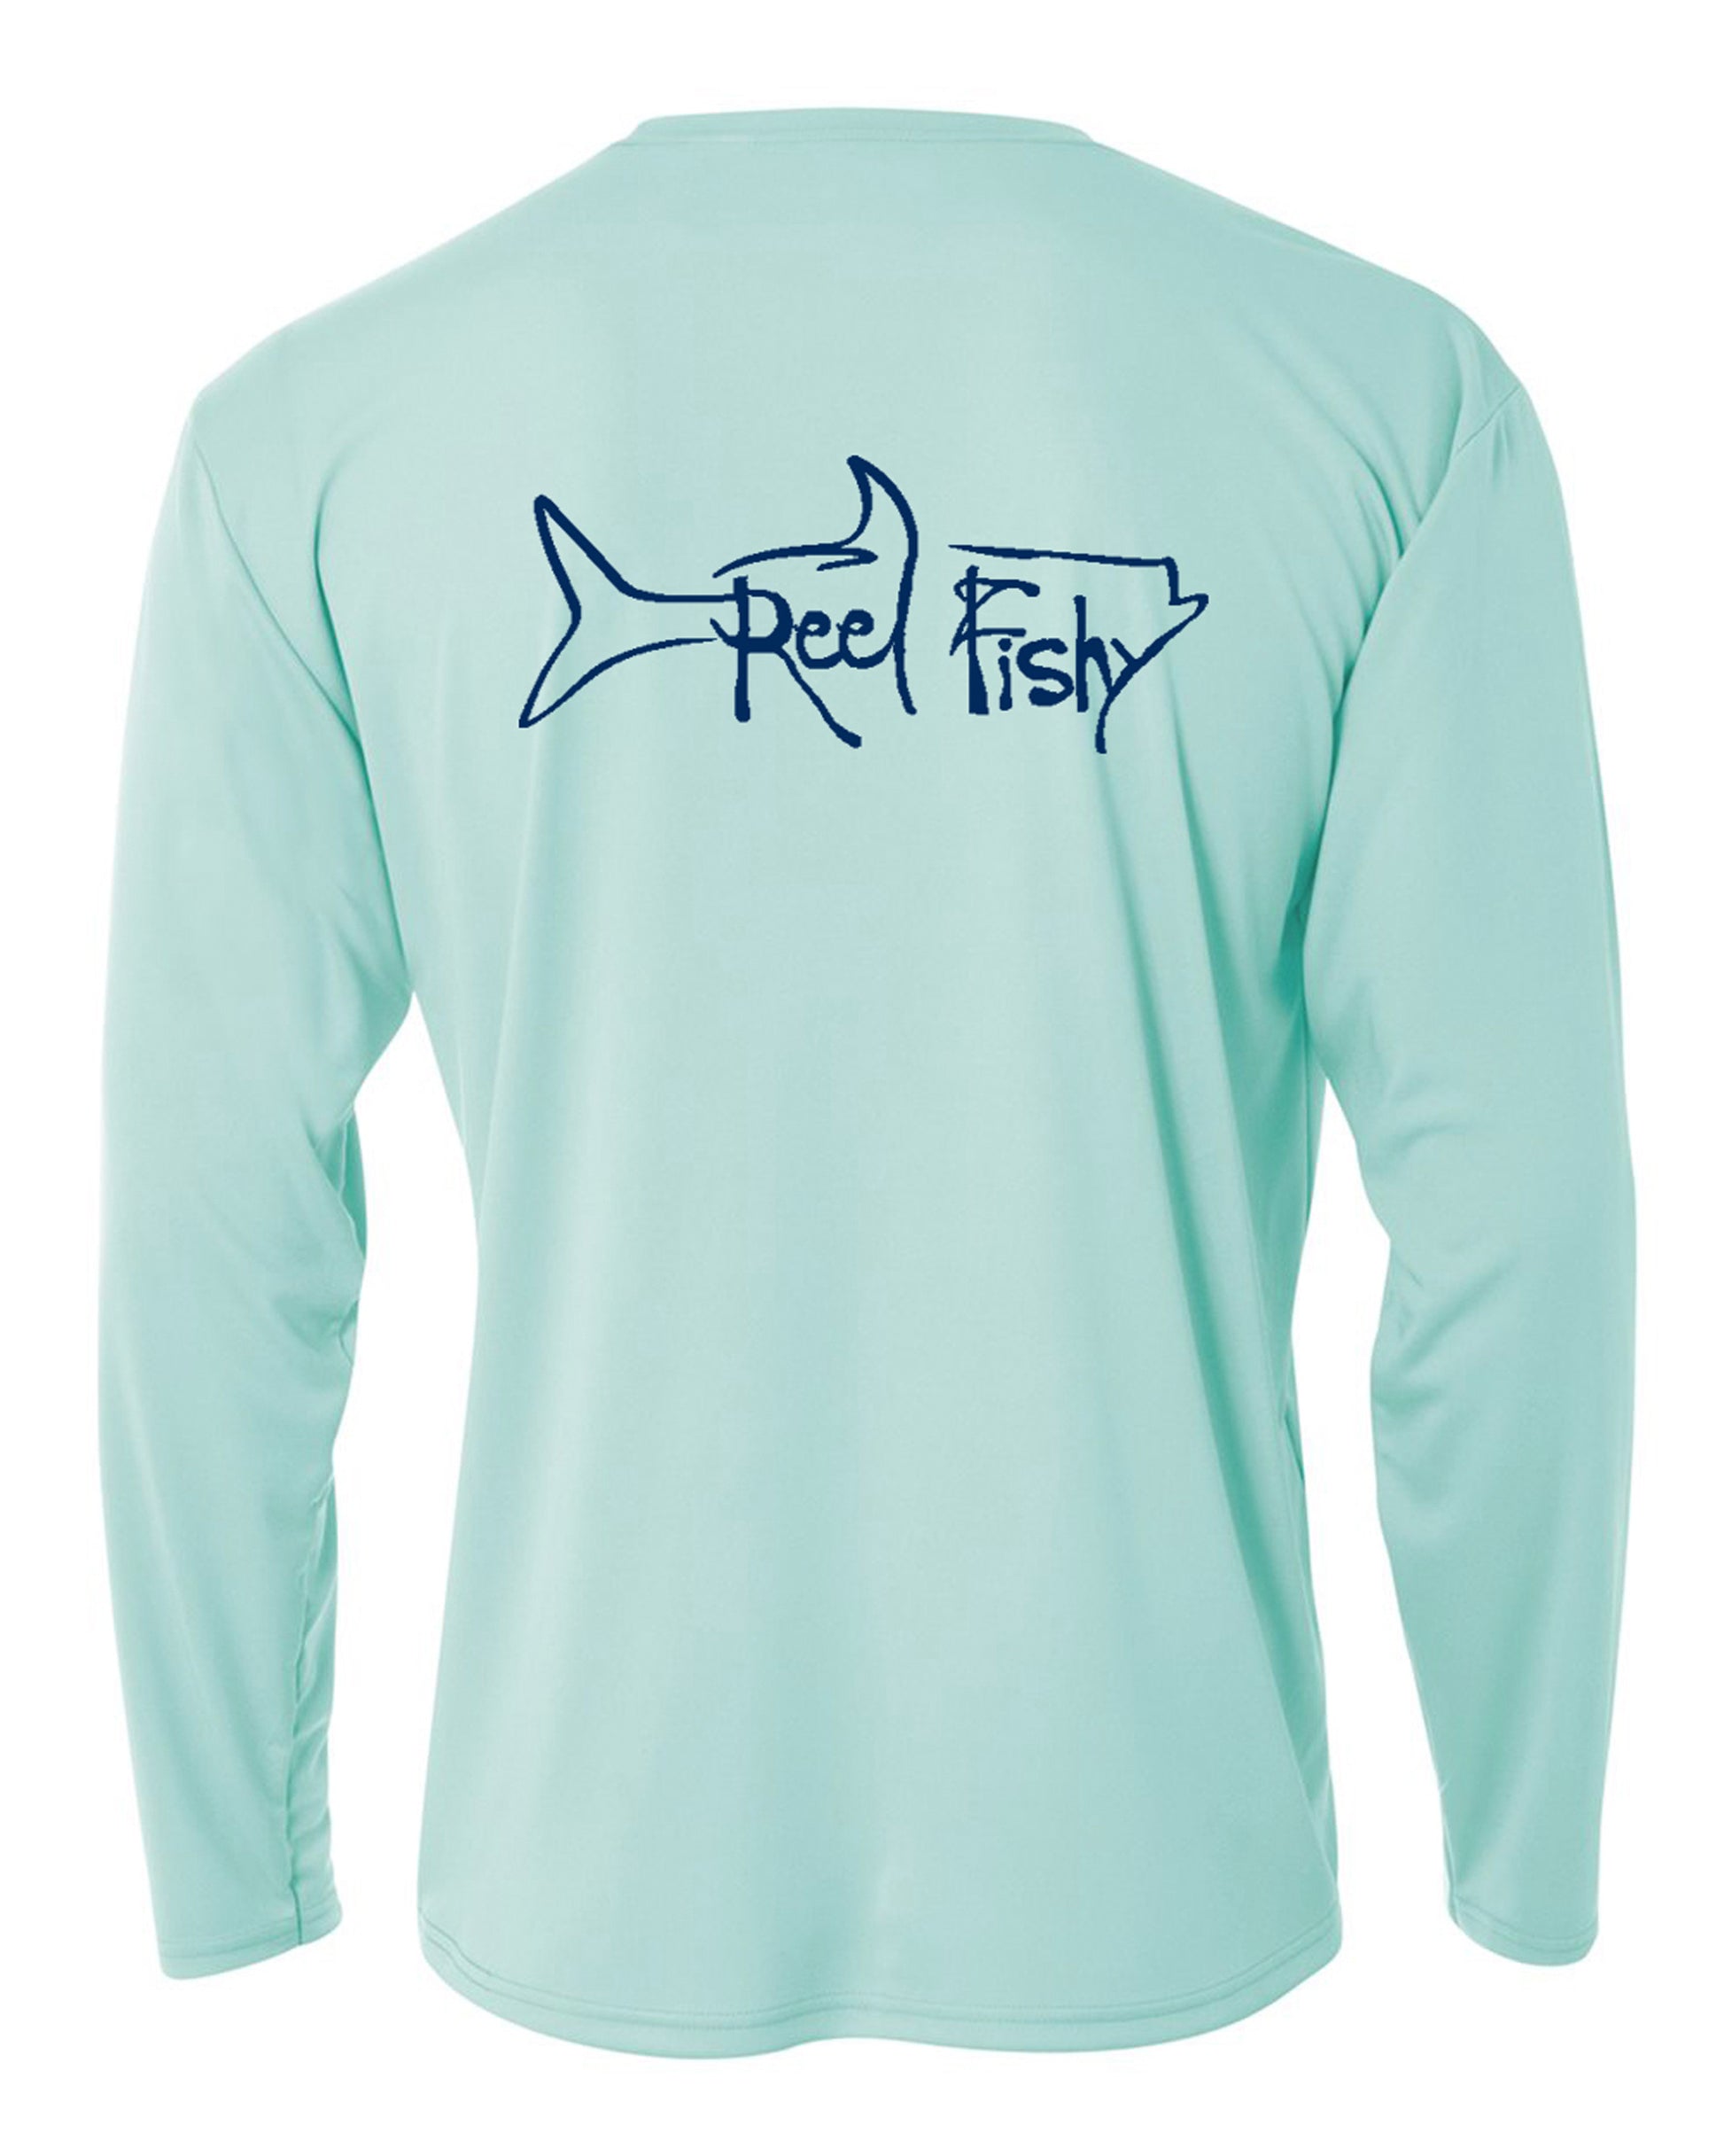 Youth Performance Dry-Fit Tarpon Fishing Shirts 50+Upf Sun Protection - Reel Fishy Apparel M / Pastel Mint L/S